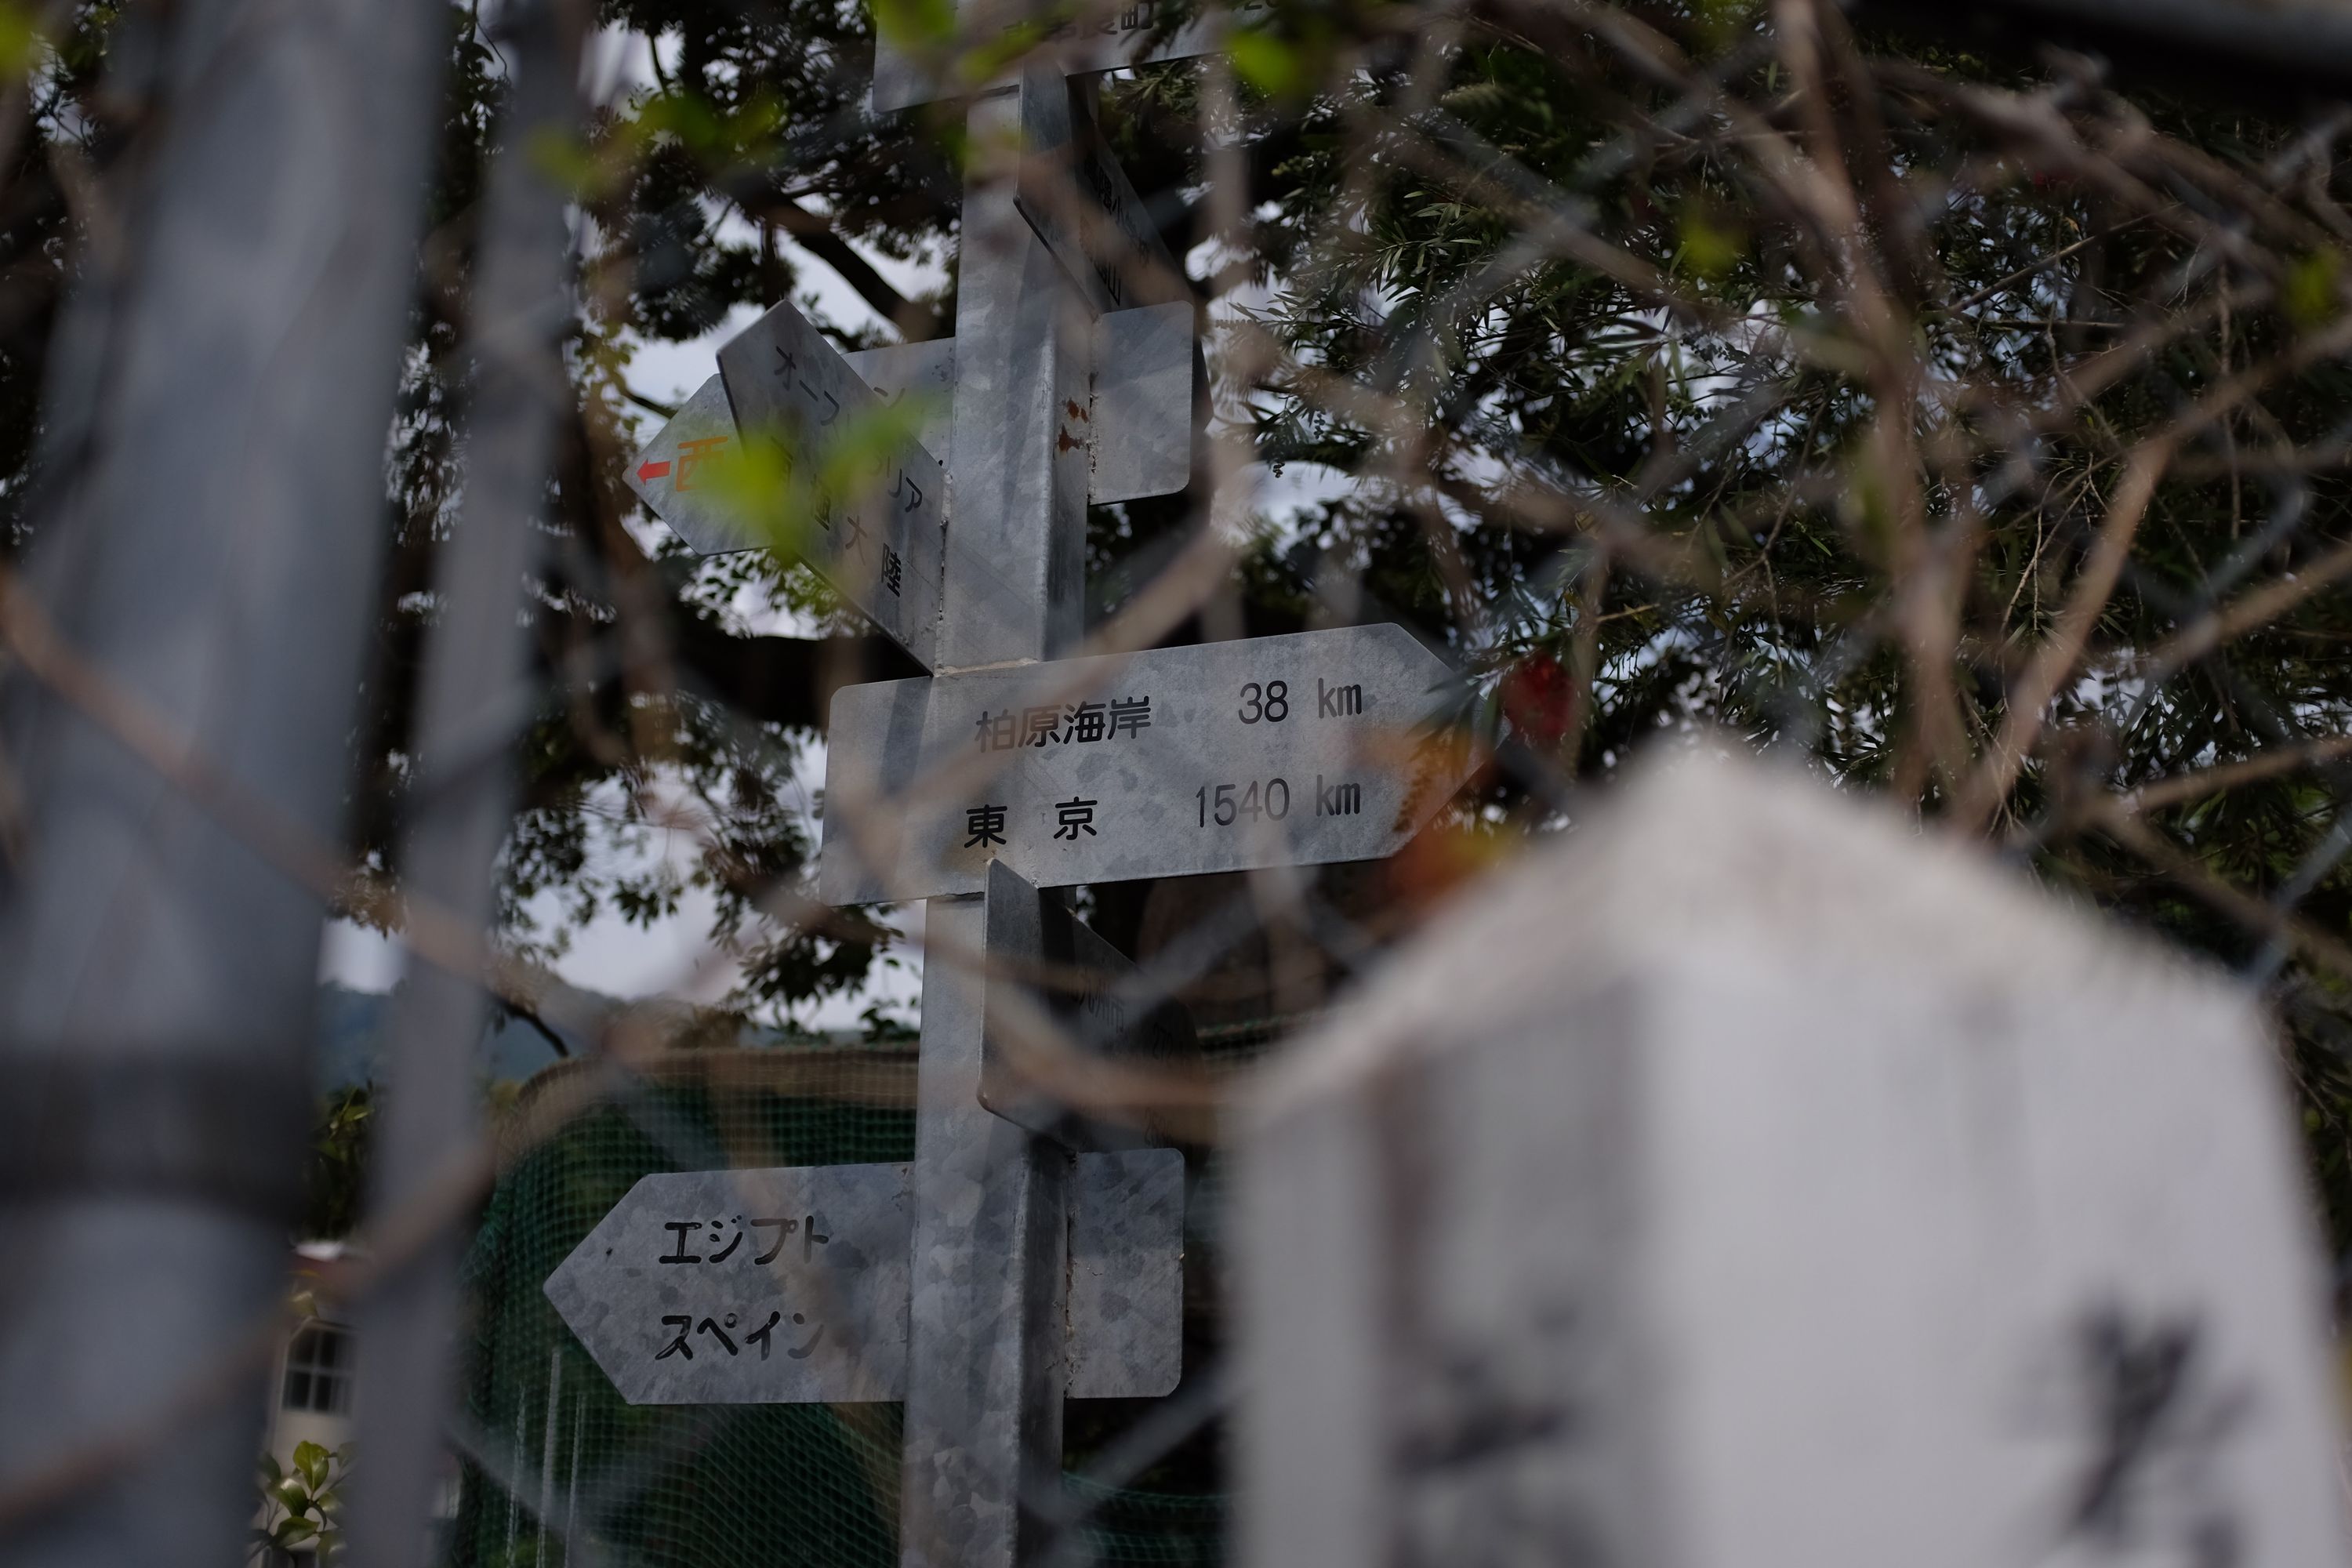 Sign behind a fence with distance to Tokyo in Kihoku Ichinari, Kanoya, Kagoshima. Photo: Peter Orosz